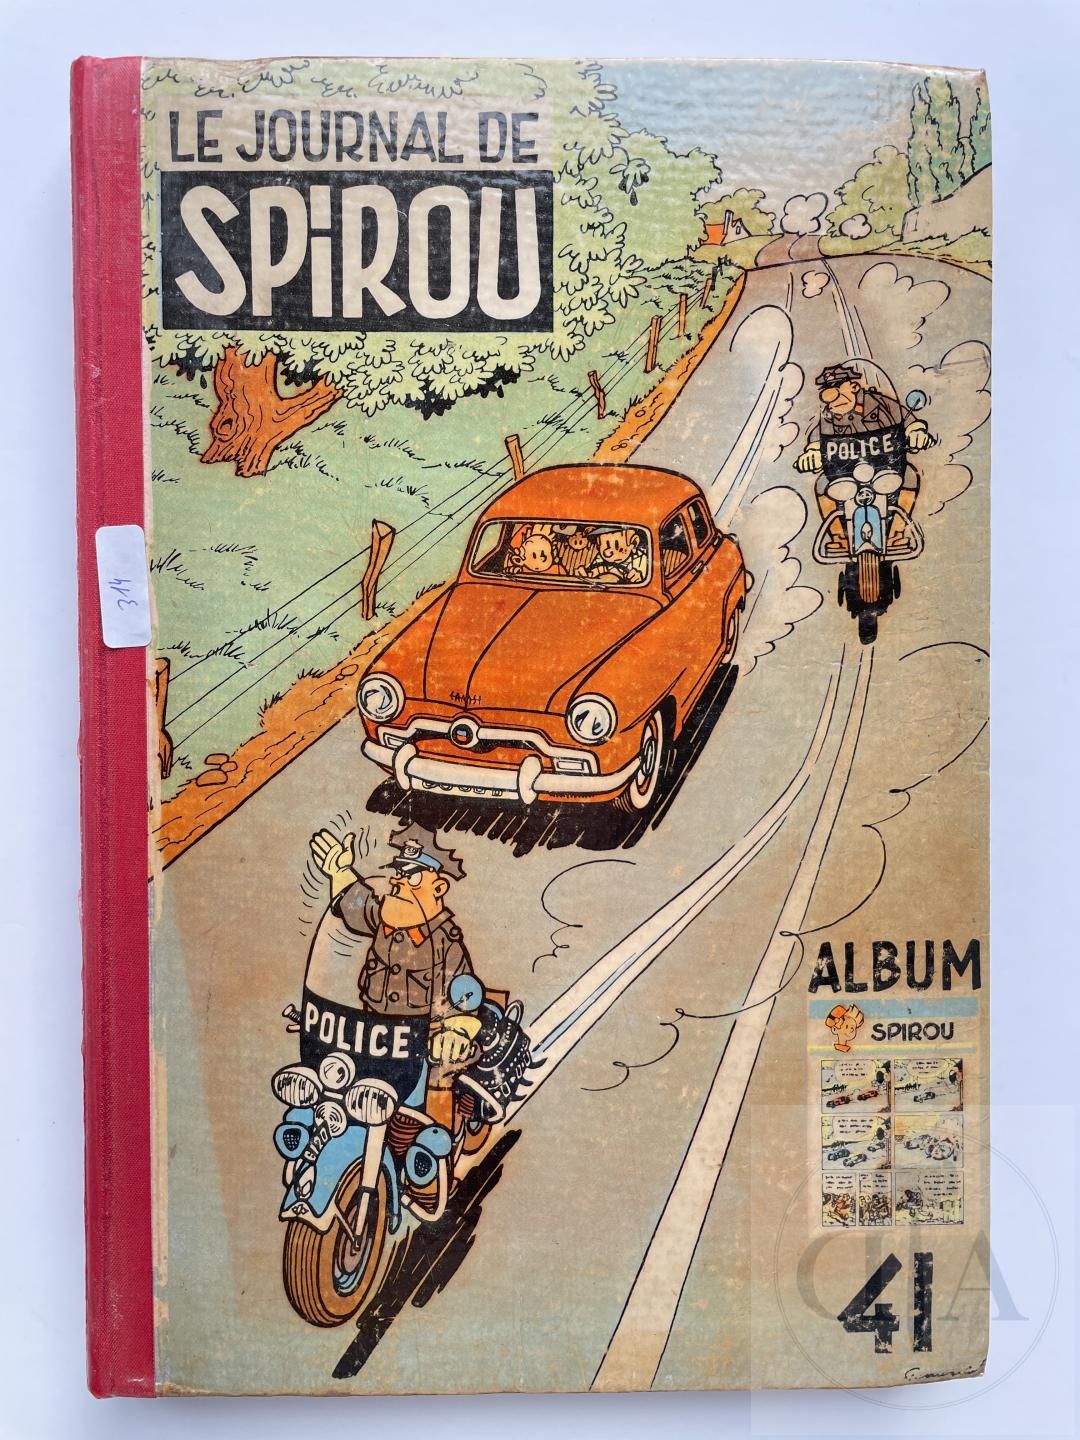 Null Le journal de Spirou/Reliure editeur n°41 de 1952. Completo en buen estado.&hellip;